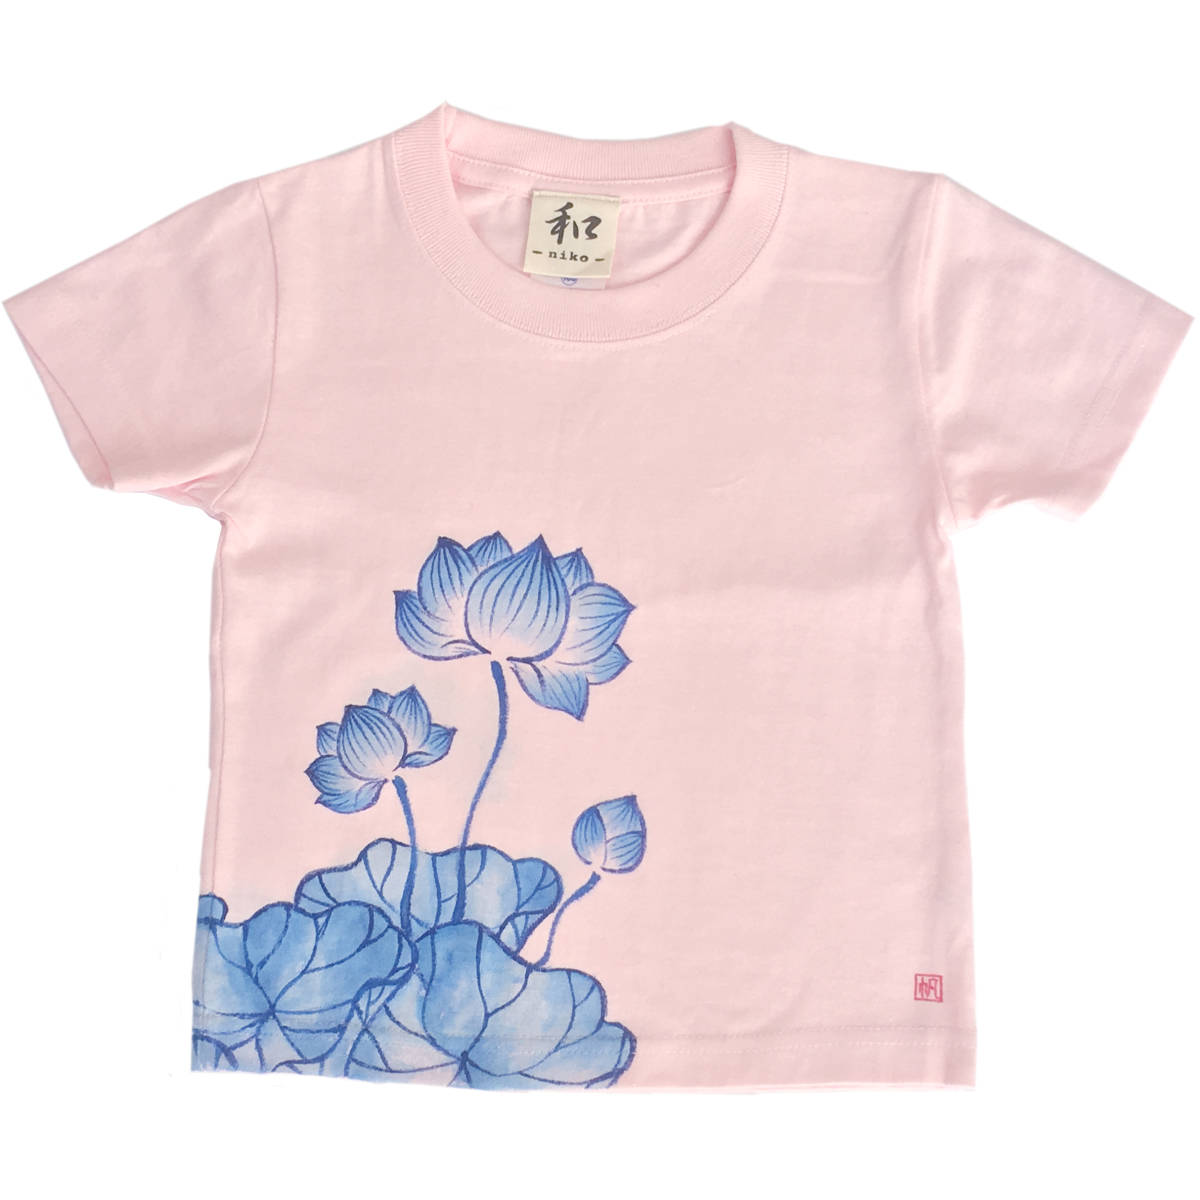 Kids T-shirt, size 150, pink lotus pattern T-shirt, hand-painted lotus flower pattern T-shirt, short sleeve, Japanese pattern, Japanese style, retro, handmade, tops, short sleeve t-shirt, 150(145~154cm)